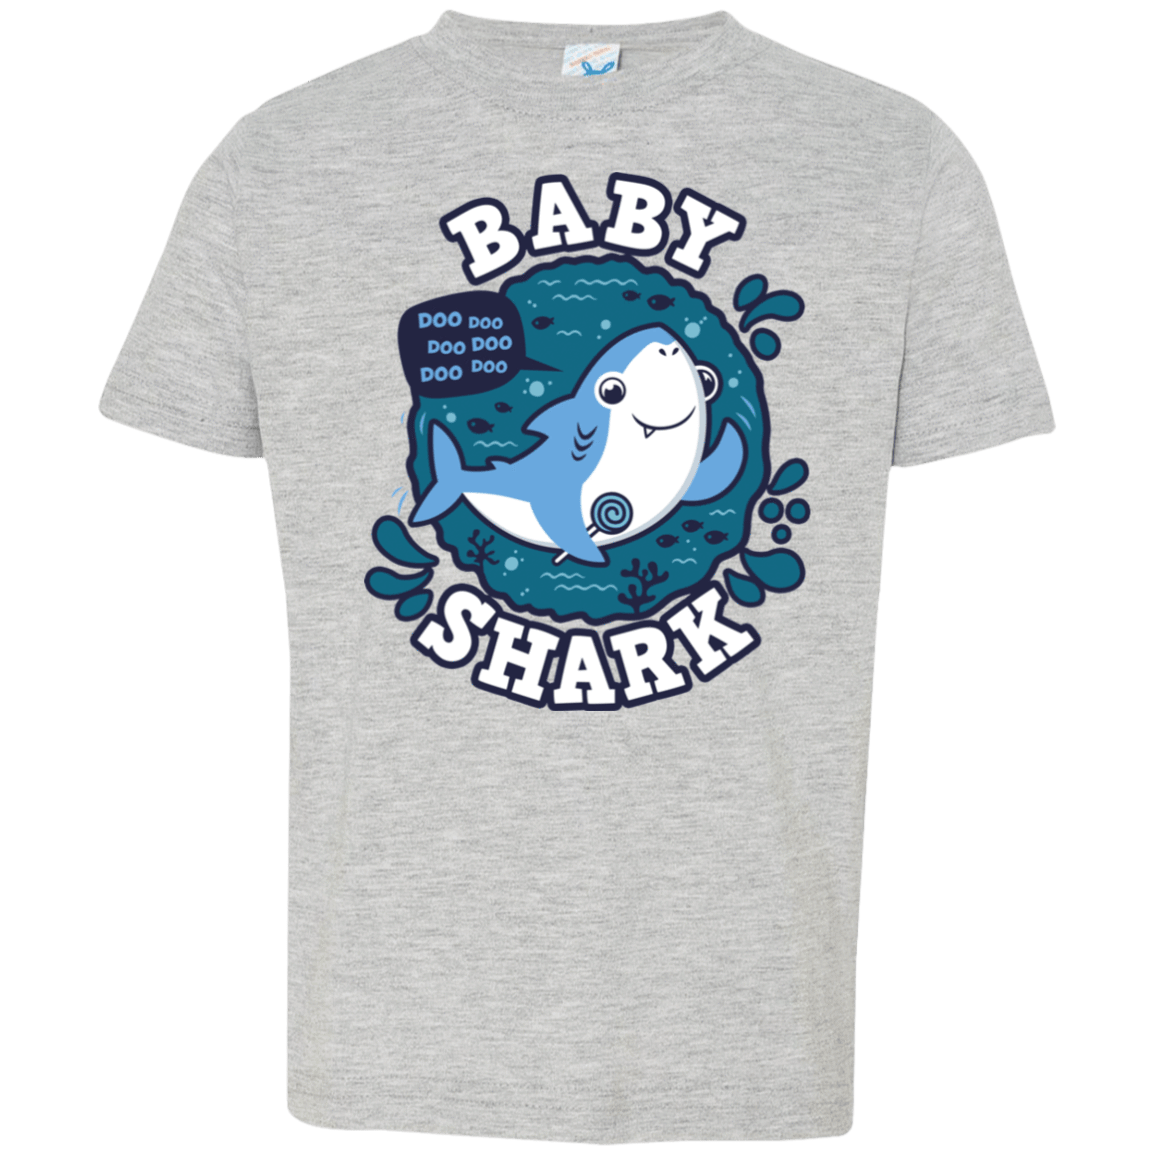 T-Shirts Heather Grey / 2T Shark Family trazo - Baby Boy Toddler Premium T-Shirt